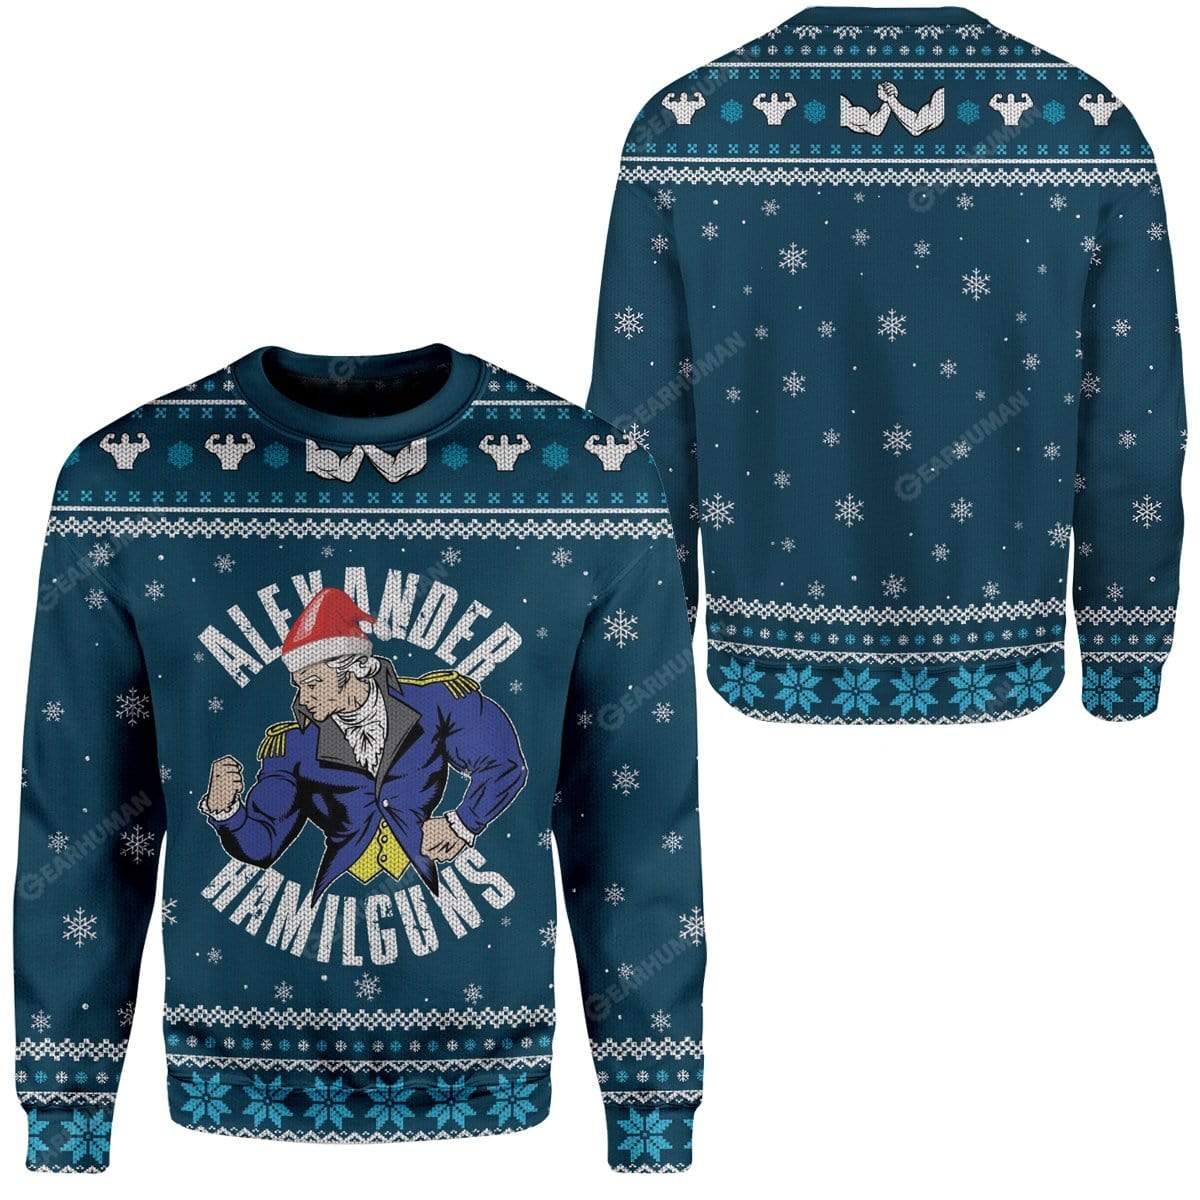 Ugly Alexander Hamilguns Custom Sweater Apparel HD-AT12111917 Ugly Christmas Sweater 